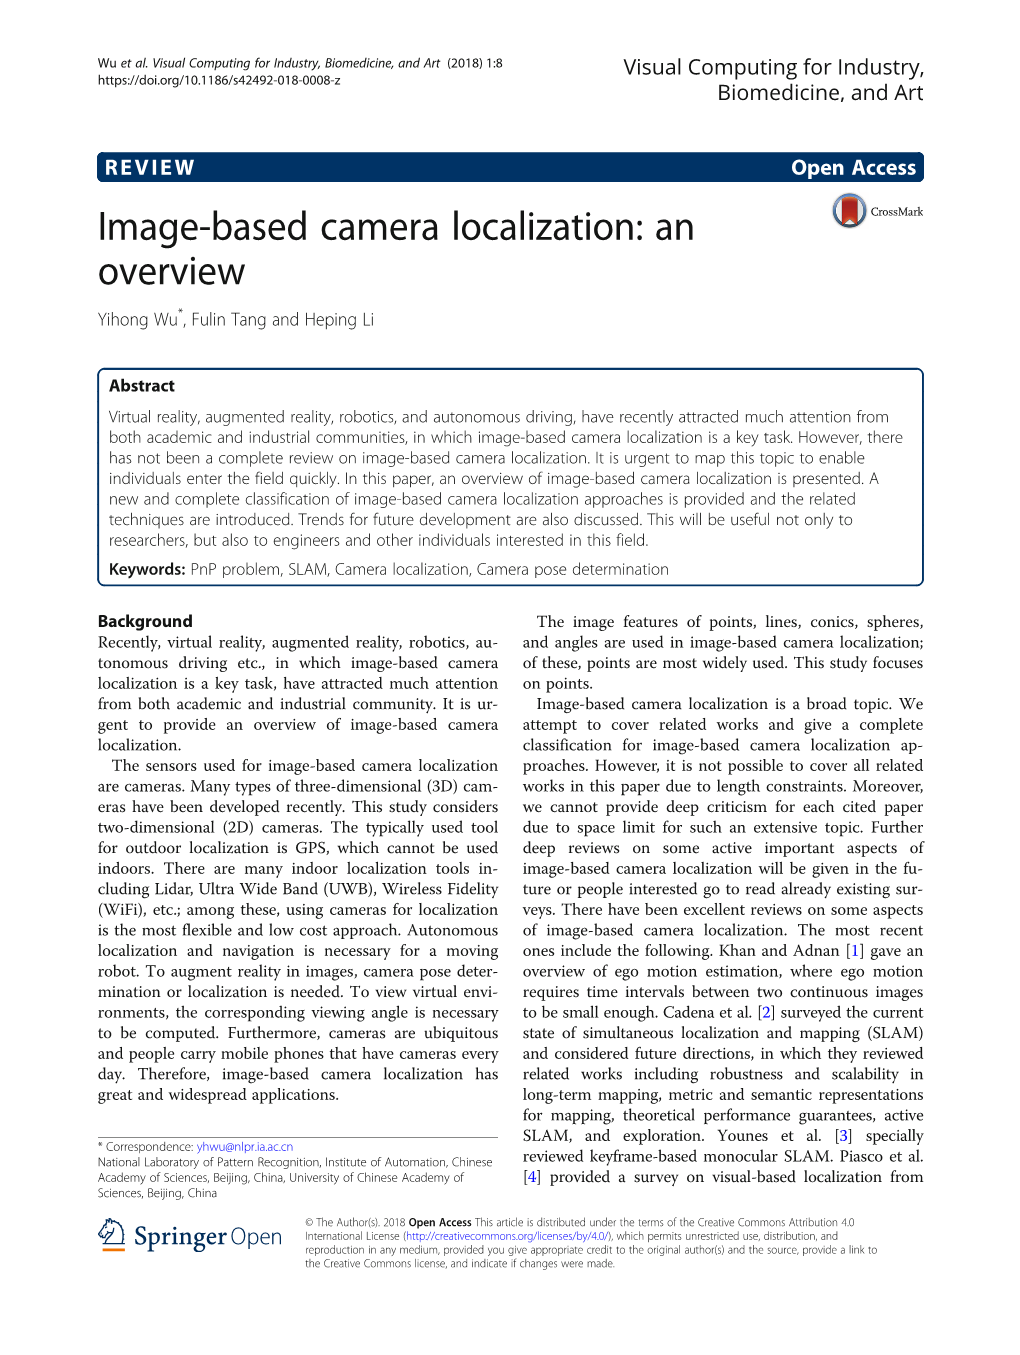 Image-Based Camera Localization: an Overview Yihong Wu*, Fulin Tang and Heping Li